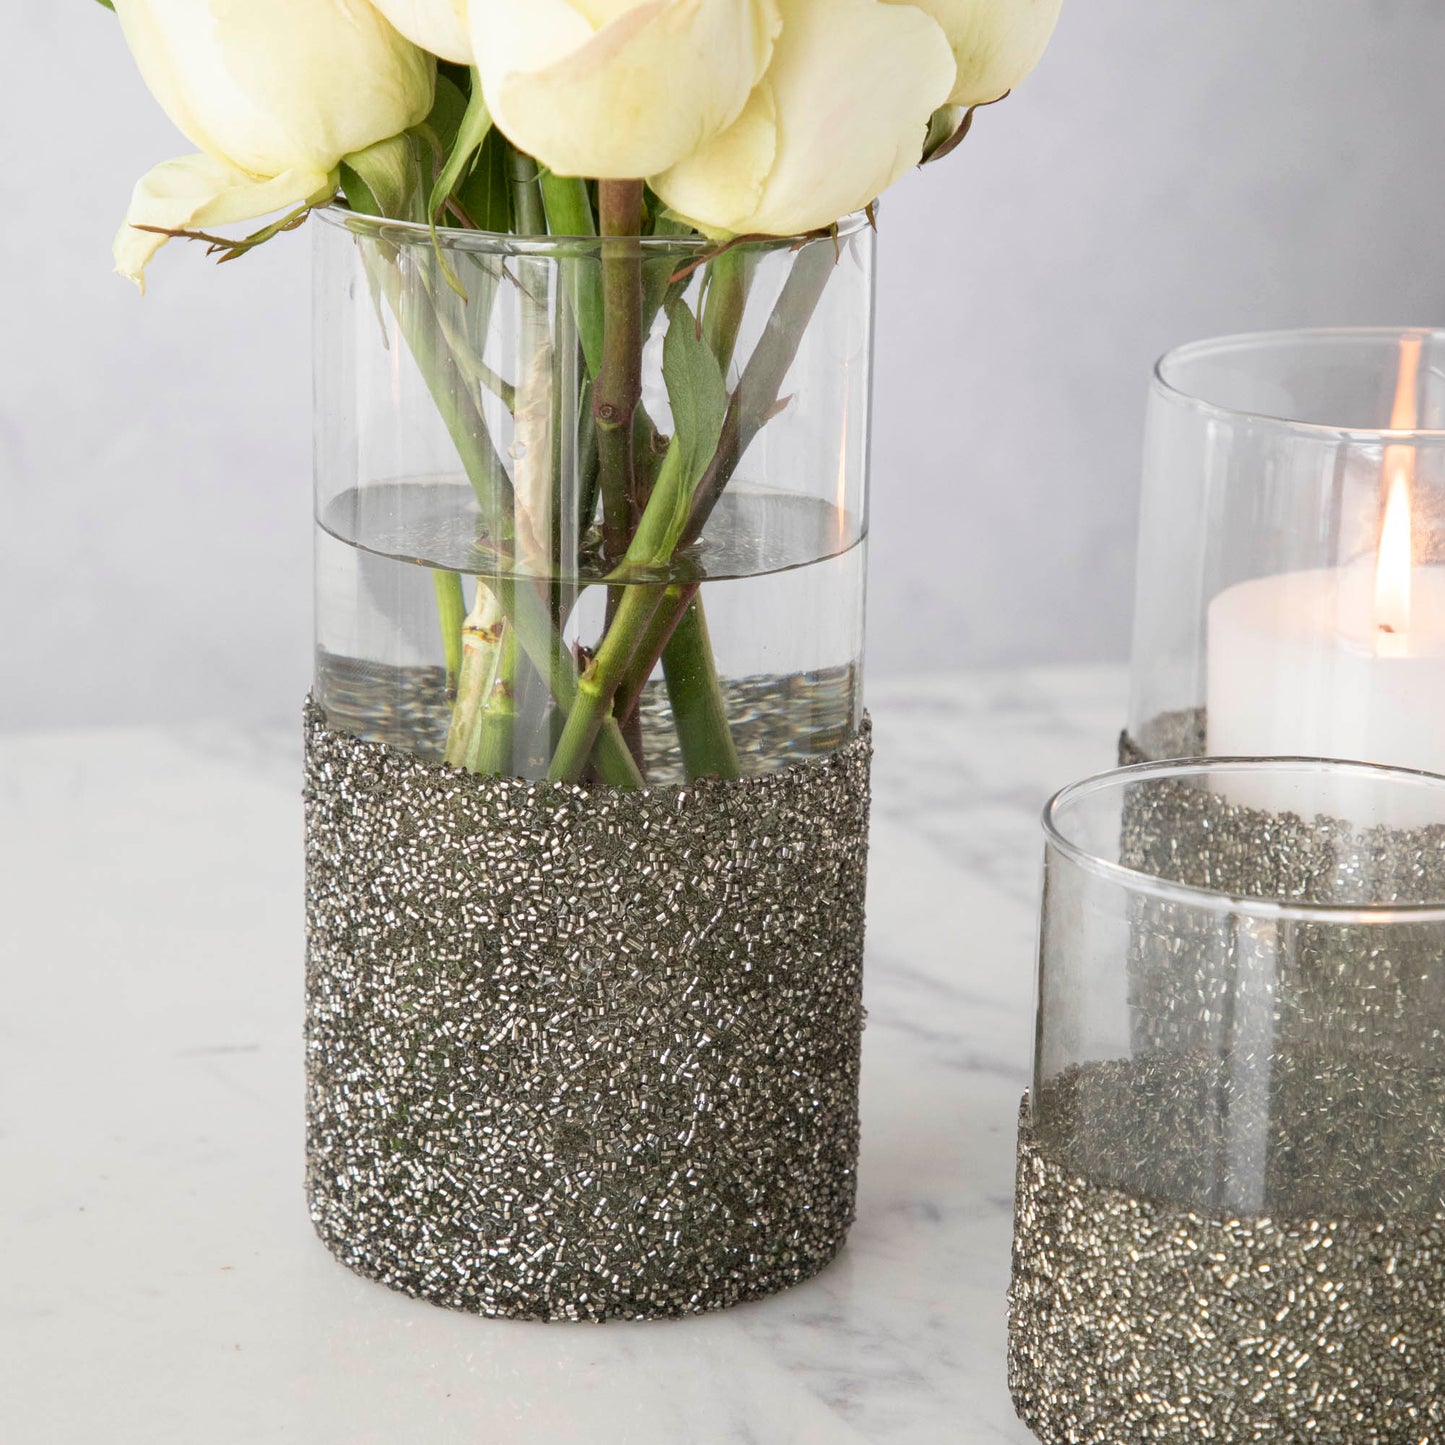 Glitter Encrusted Candleholder/Vase